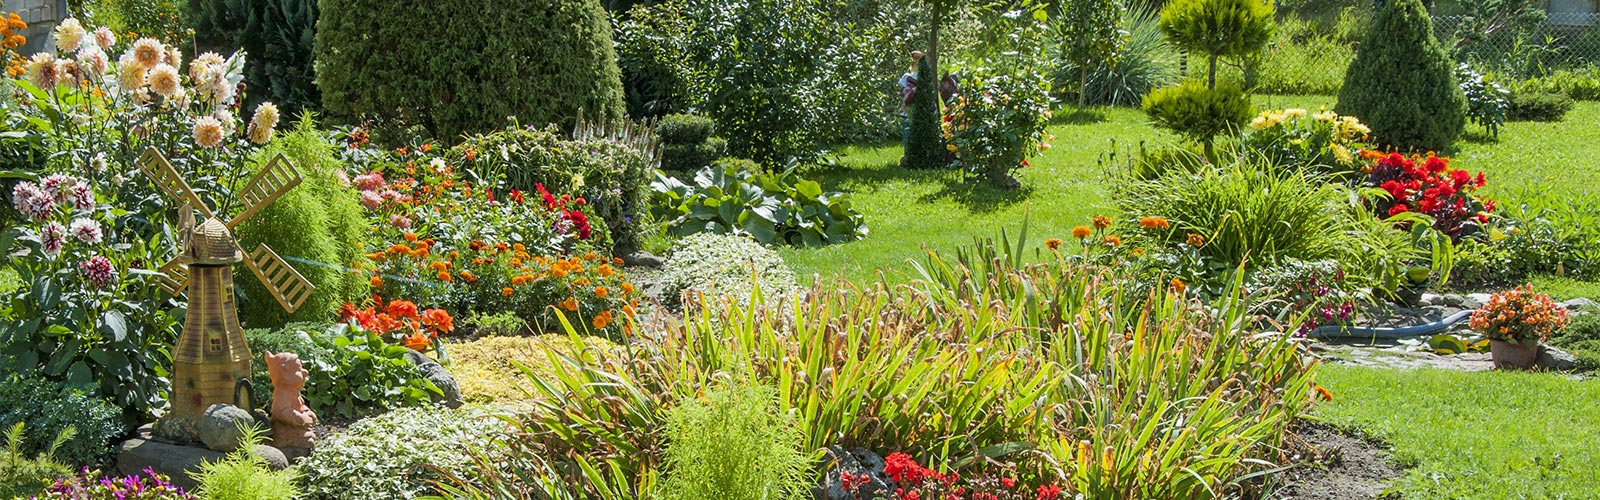 Beautiful Home Garden With No White Flies